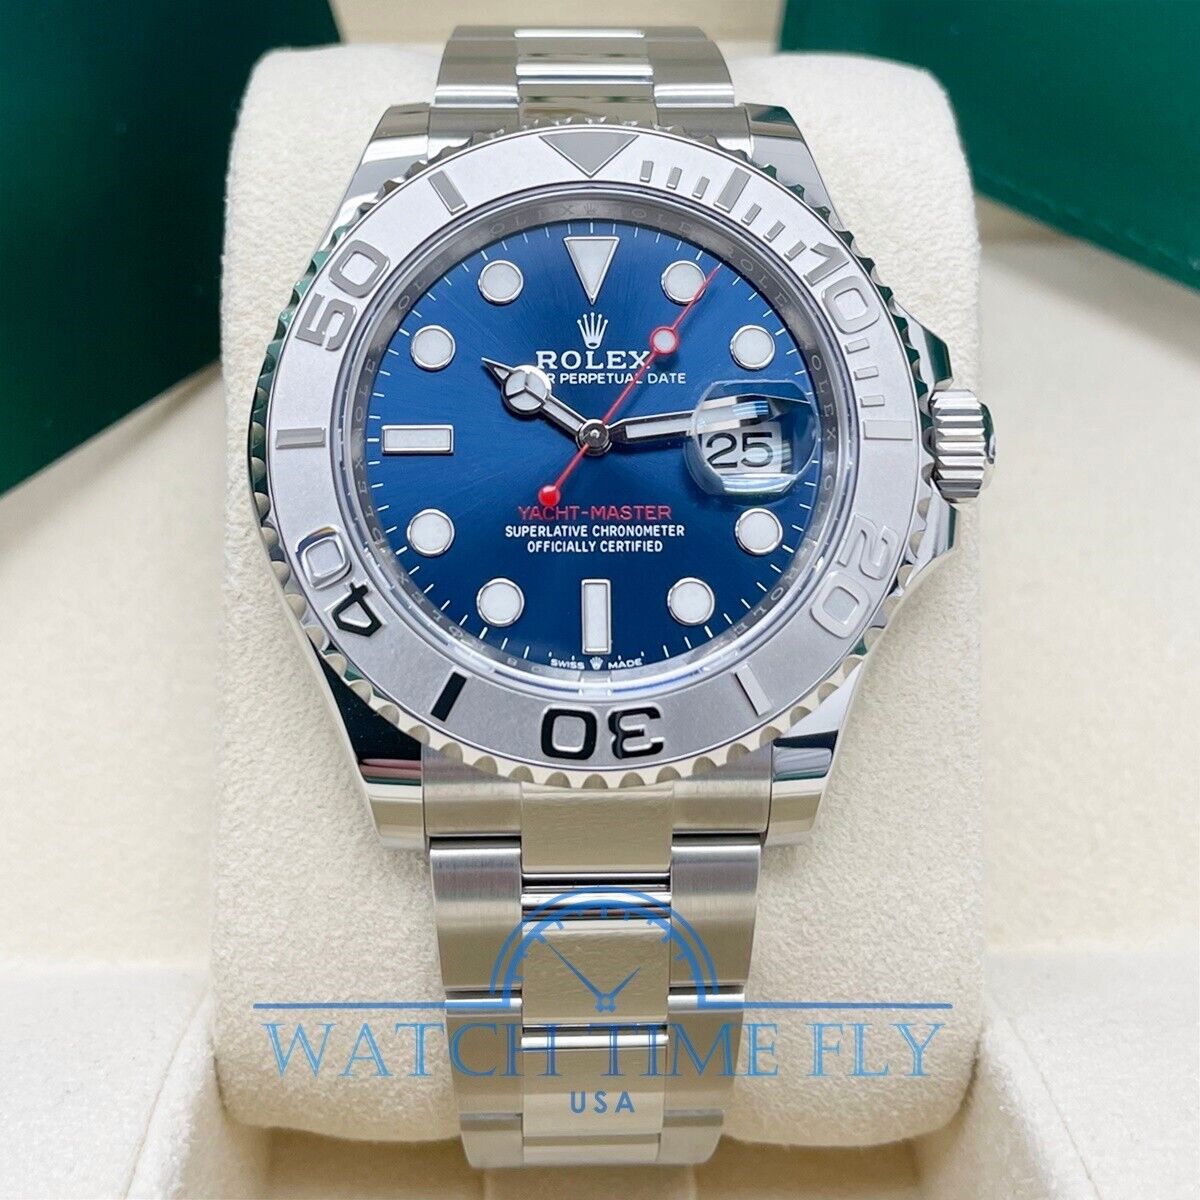 Rolex Yachtmaster 40 Steel Platinum Dial Bezel Mens Watch 16622